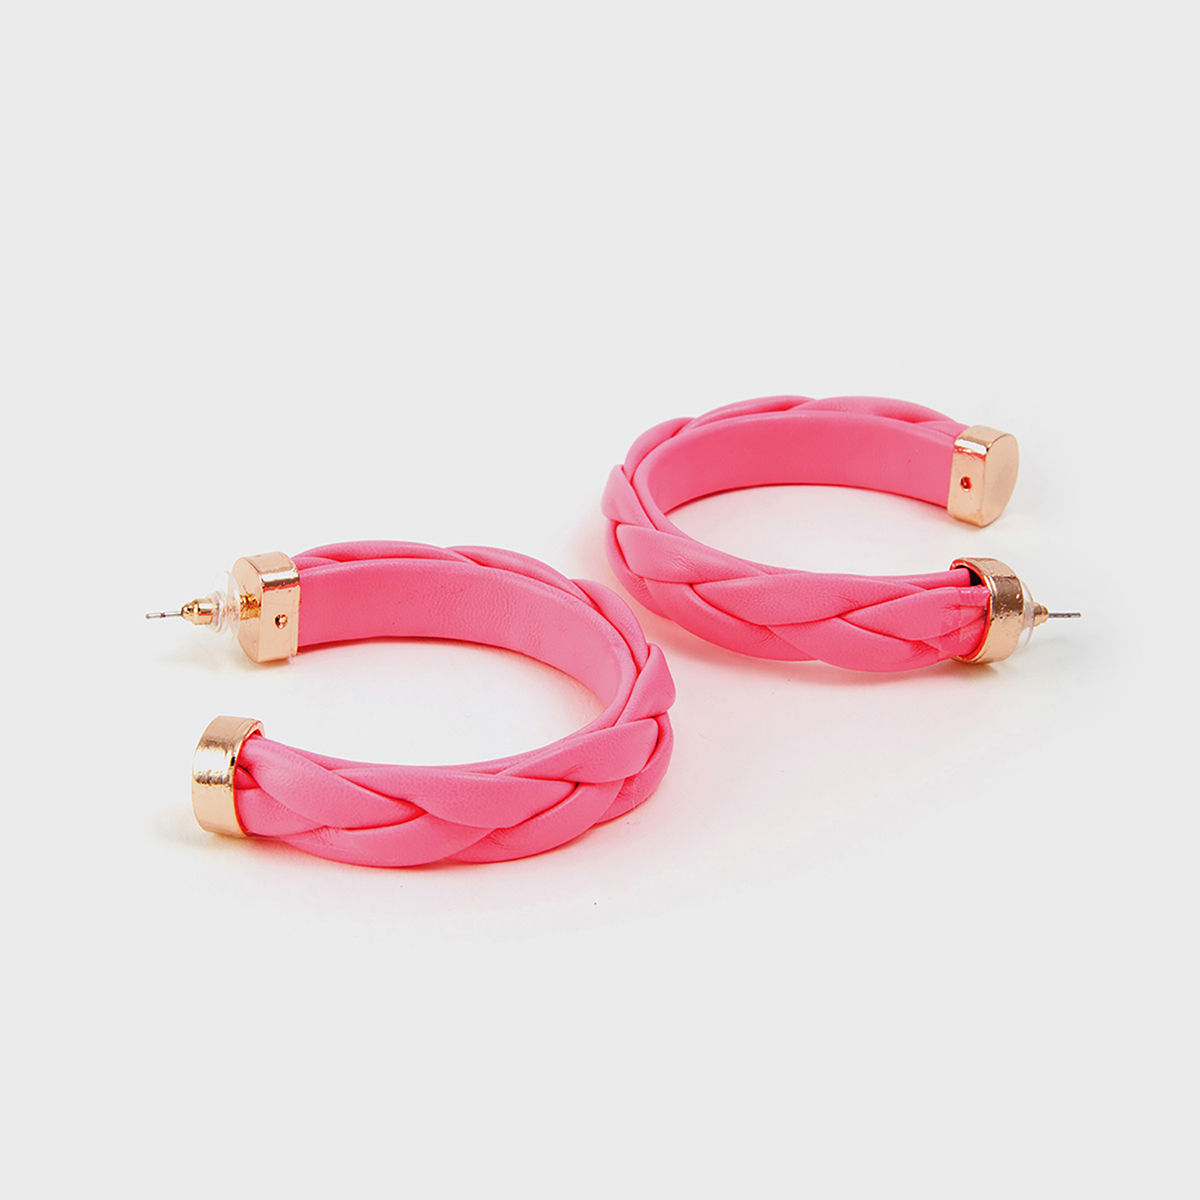 Buy Neon Orange Green and Yellow Tassel Earrings Handmade Other Online in  India  Etsy